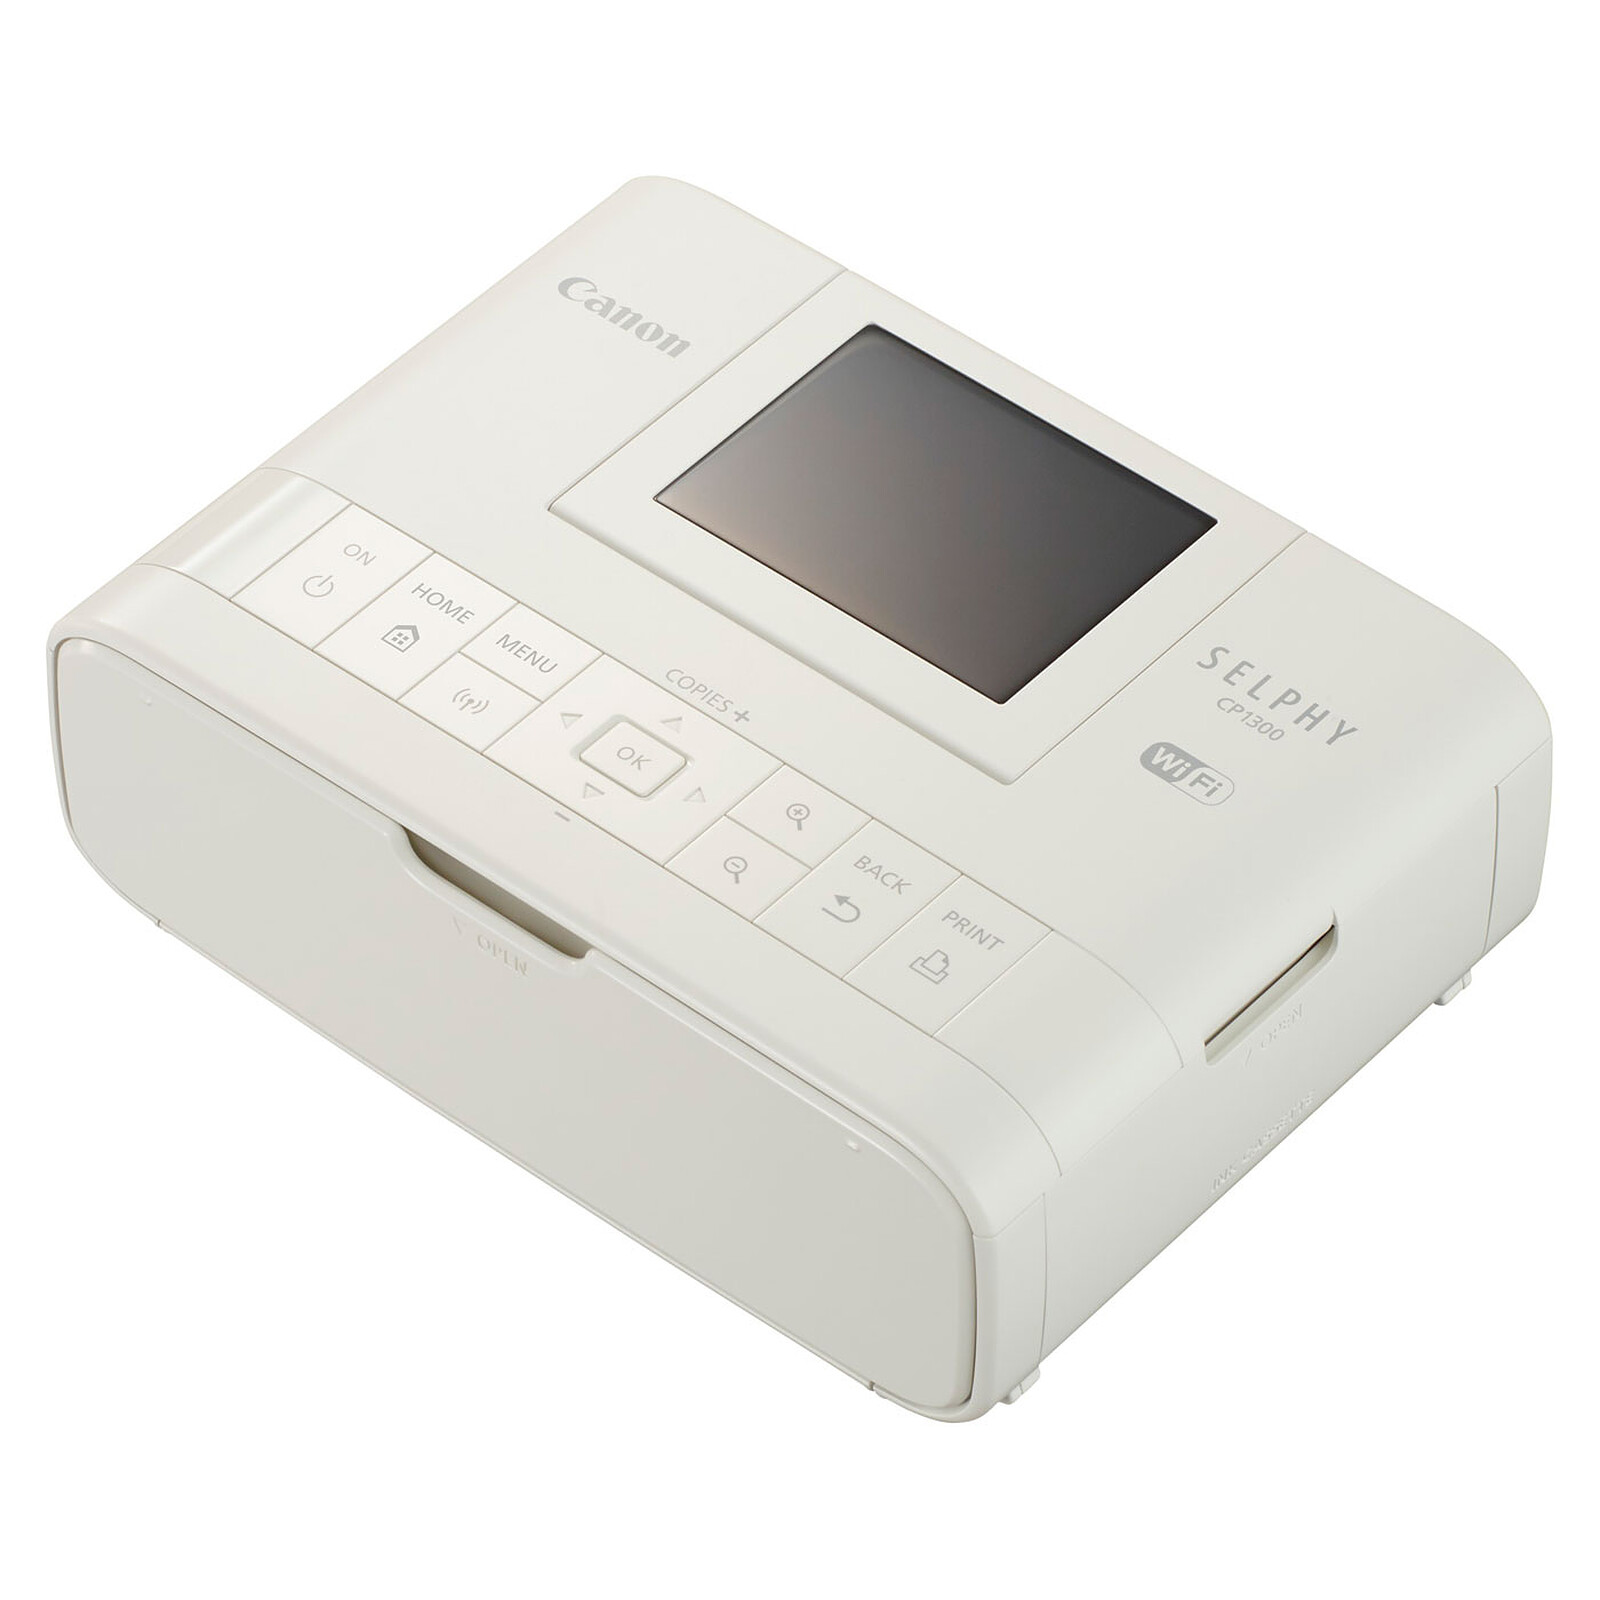 Canon SELPHY CP1300 Compact Photo Printer (White) 